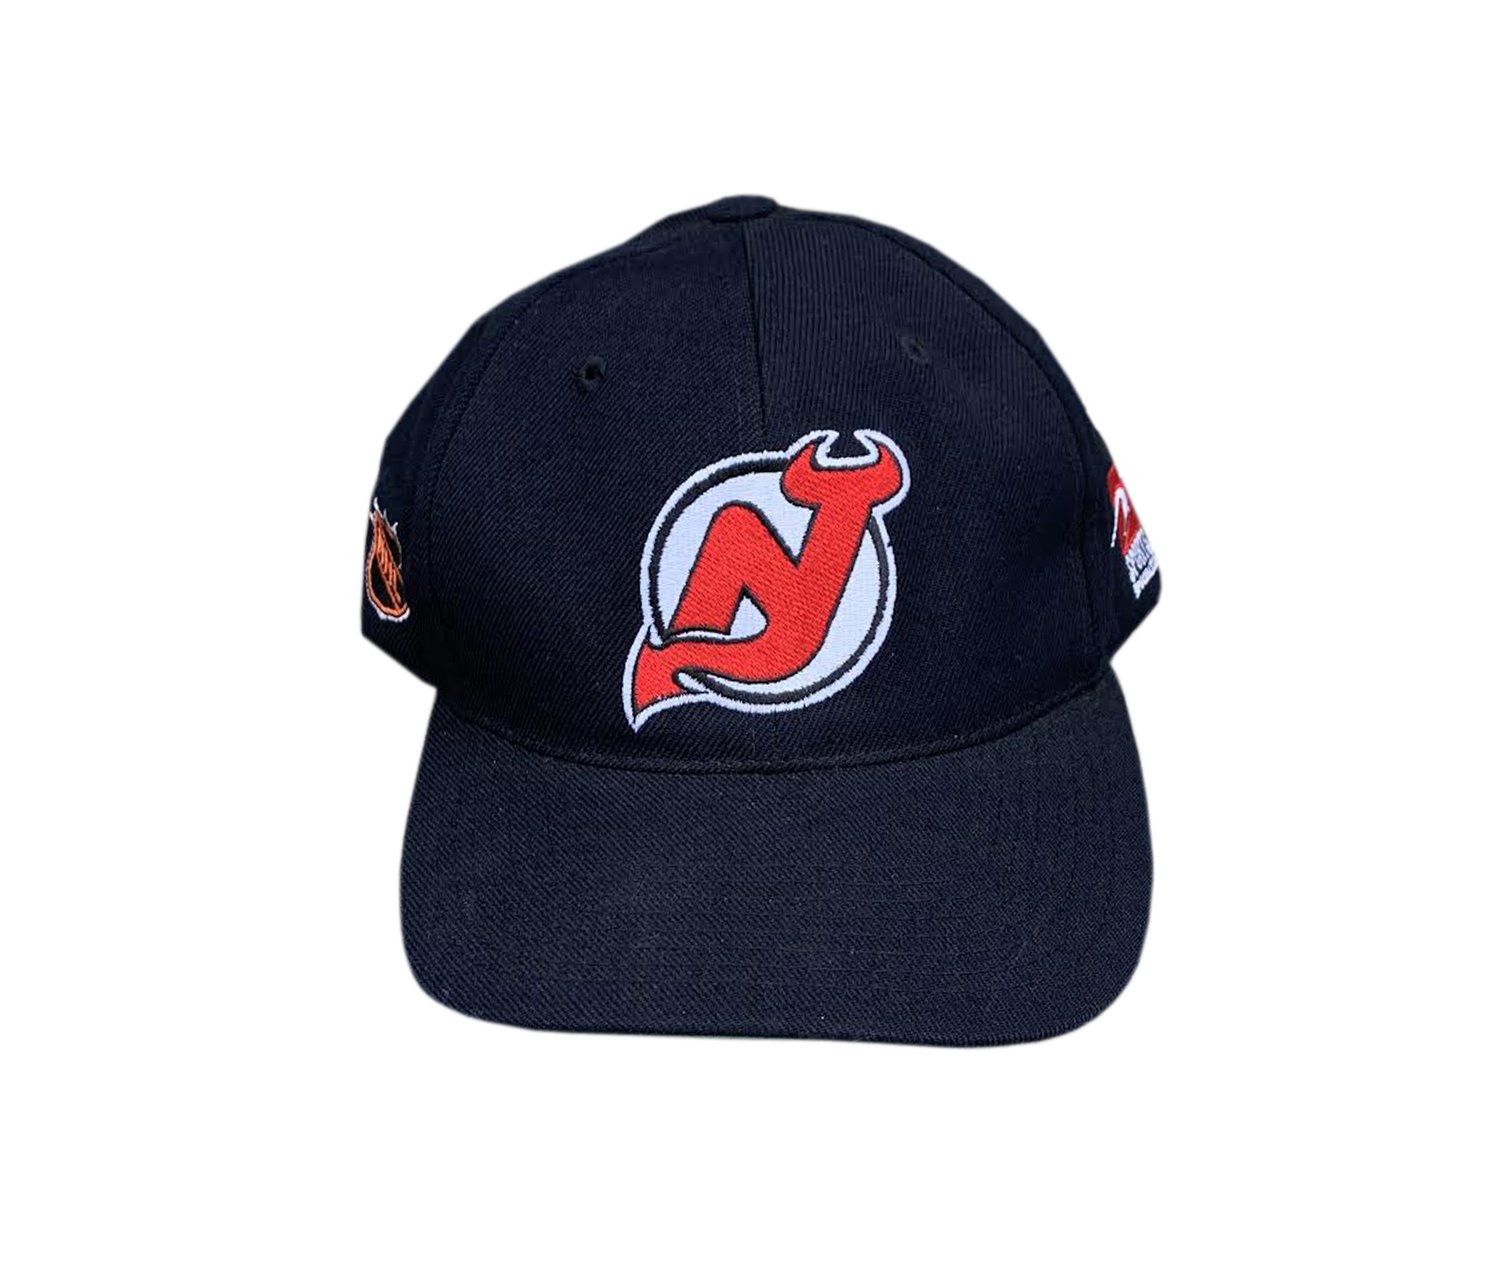 Vintage, Accessories, Vintage 9s Nhl Green New Jersey Devils Hat